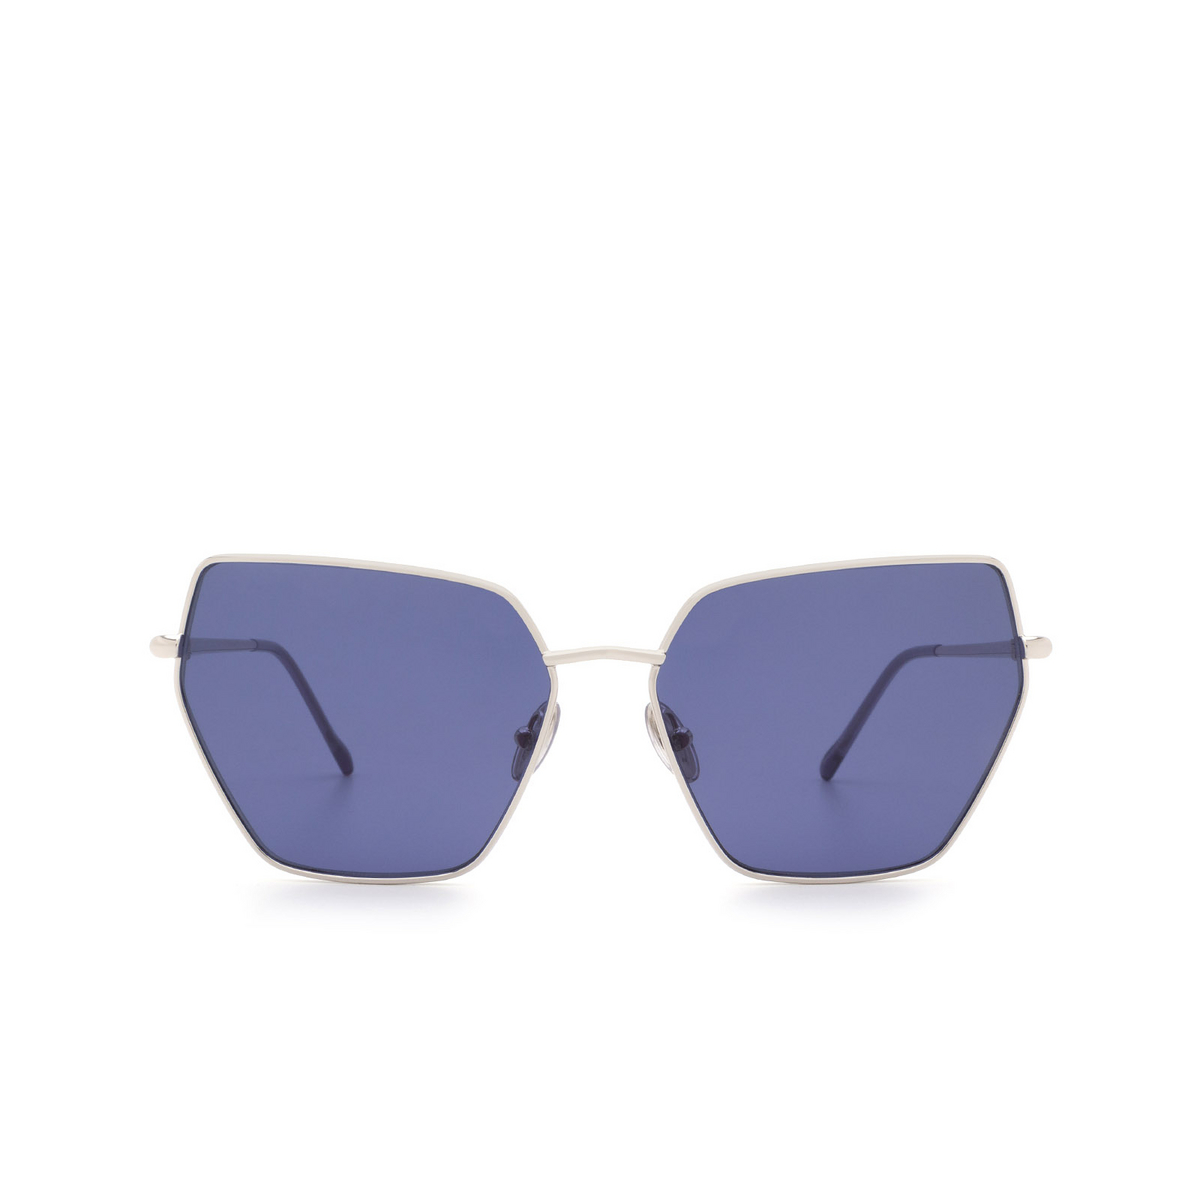 Sportmax® Irregular Sunglasses: SM0036 color Grey 16V - front view.